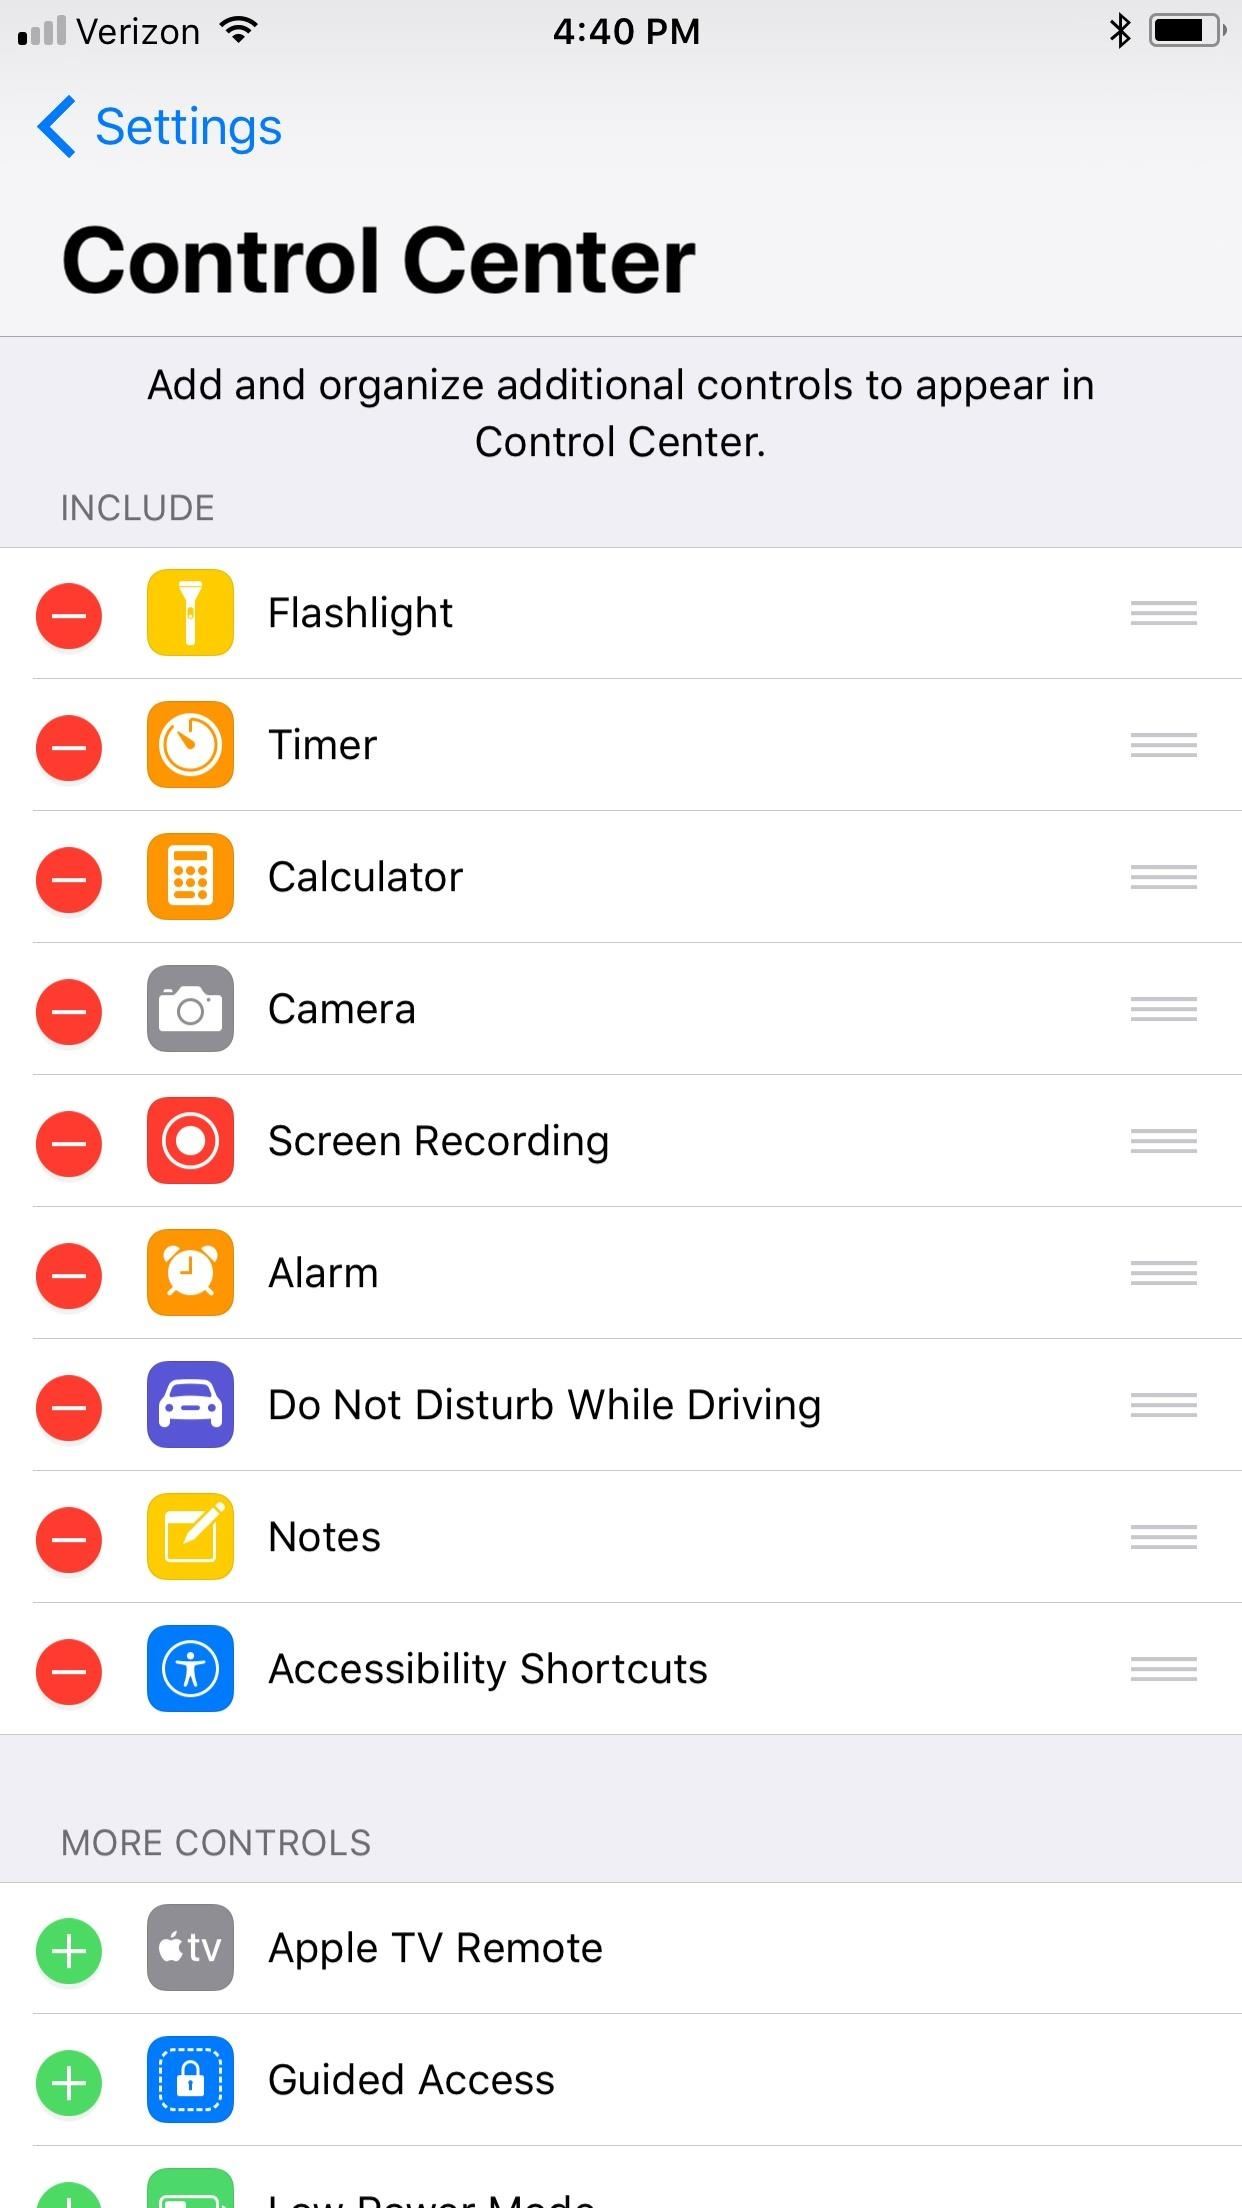 iOS 11 trás modo noturno finalmente ao iPhone, saiba como ativar 12